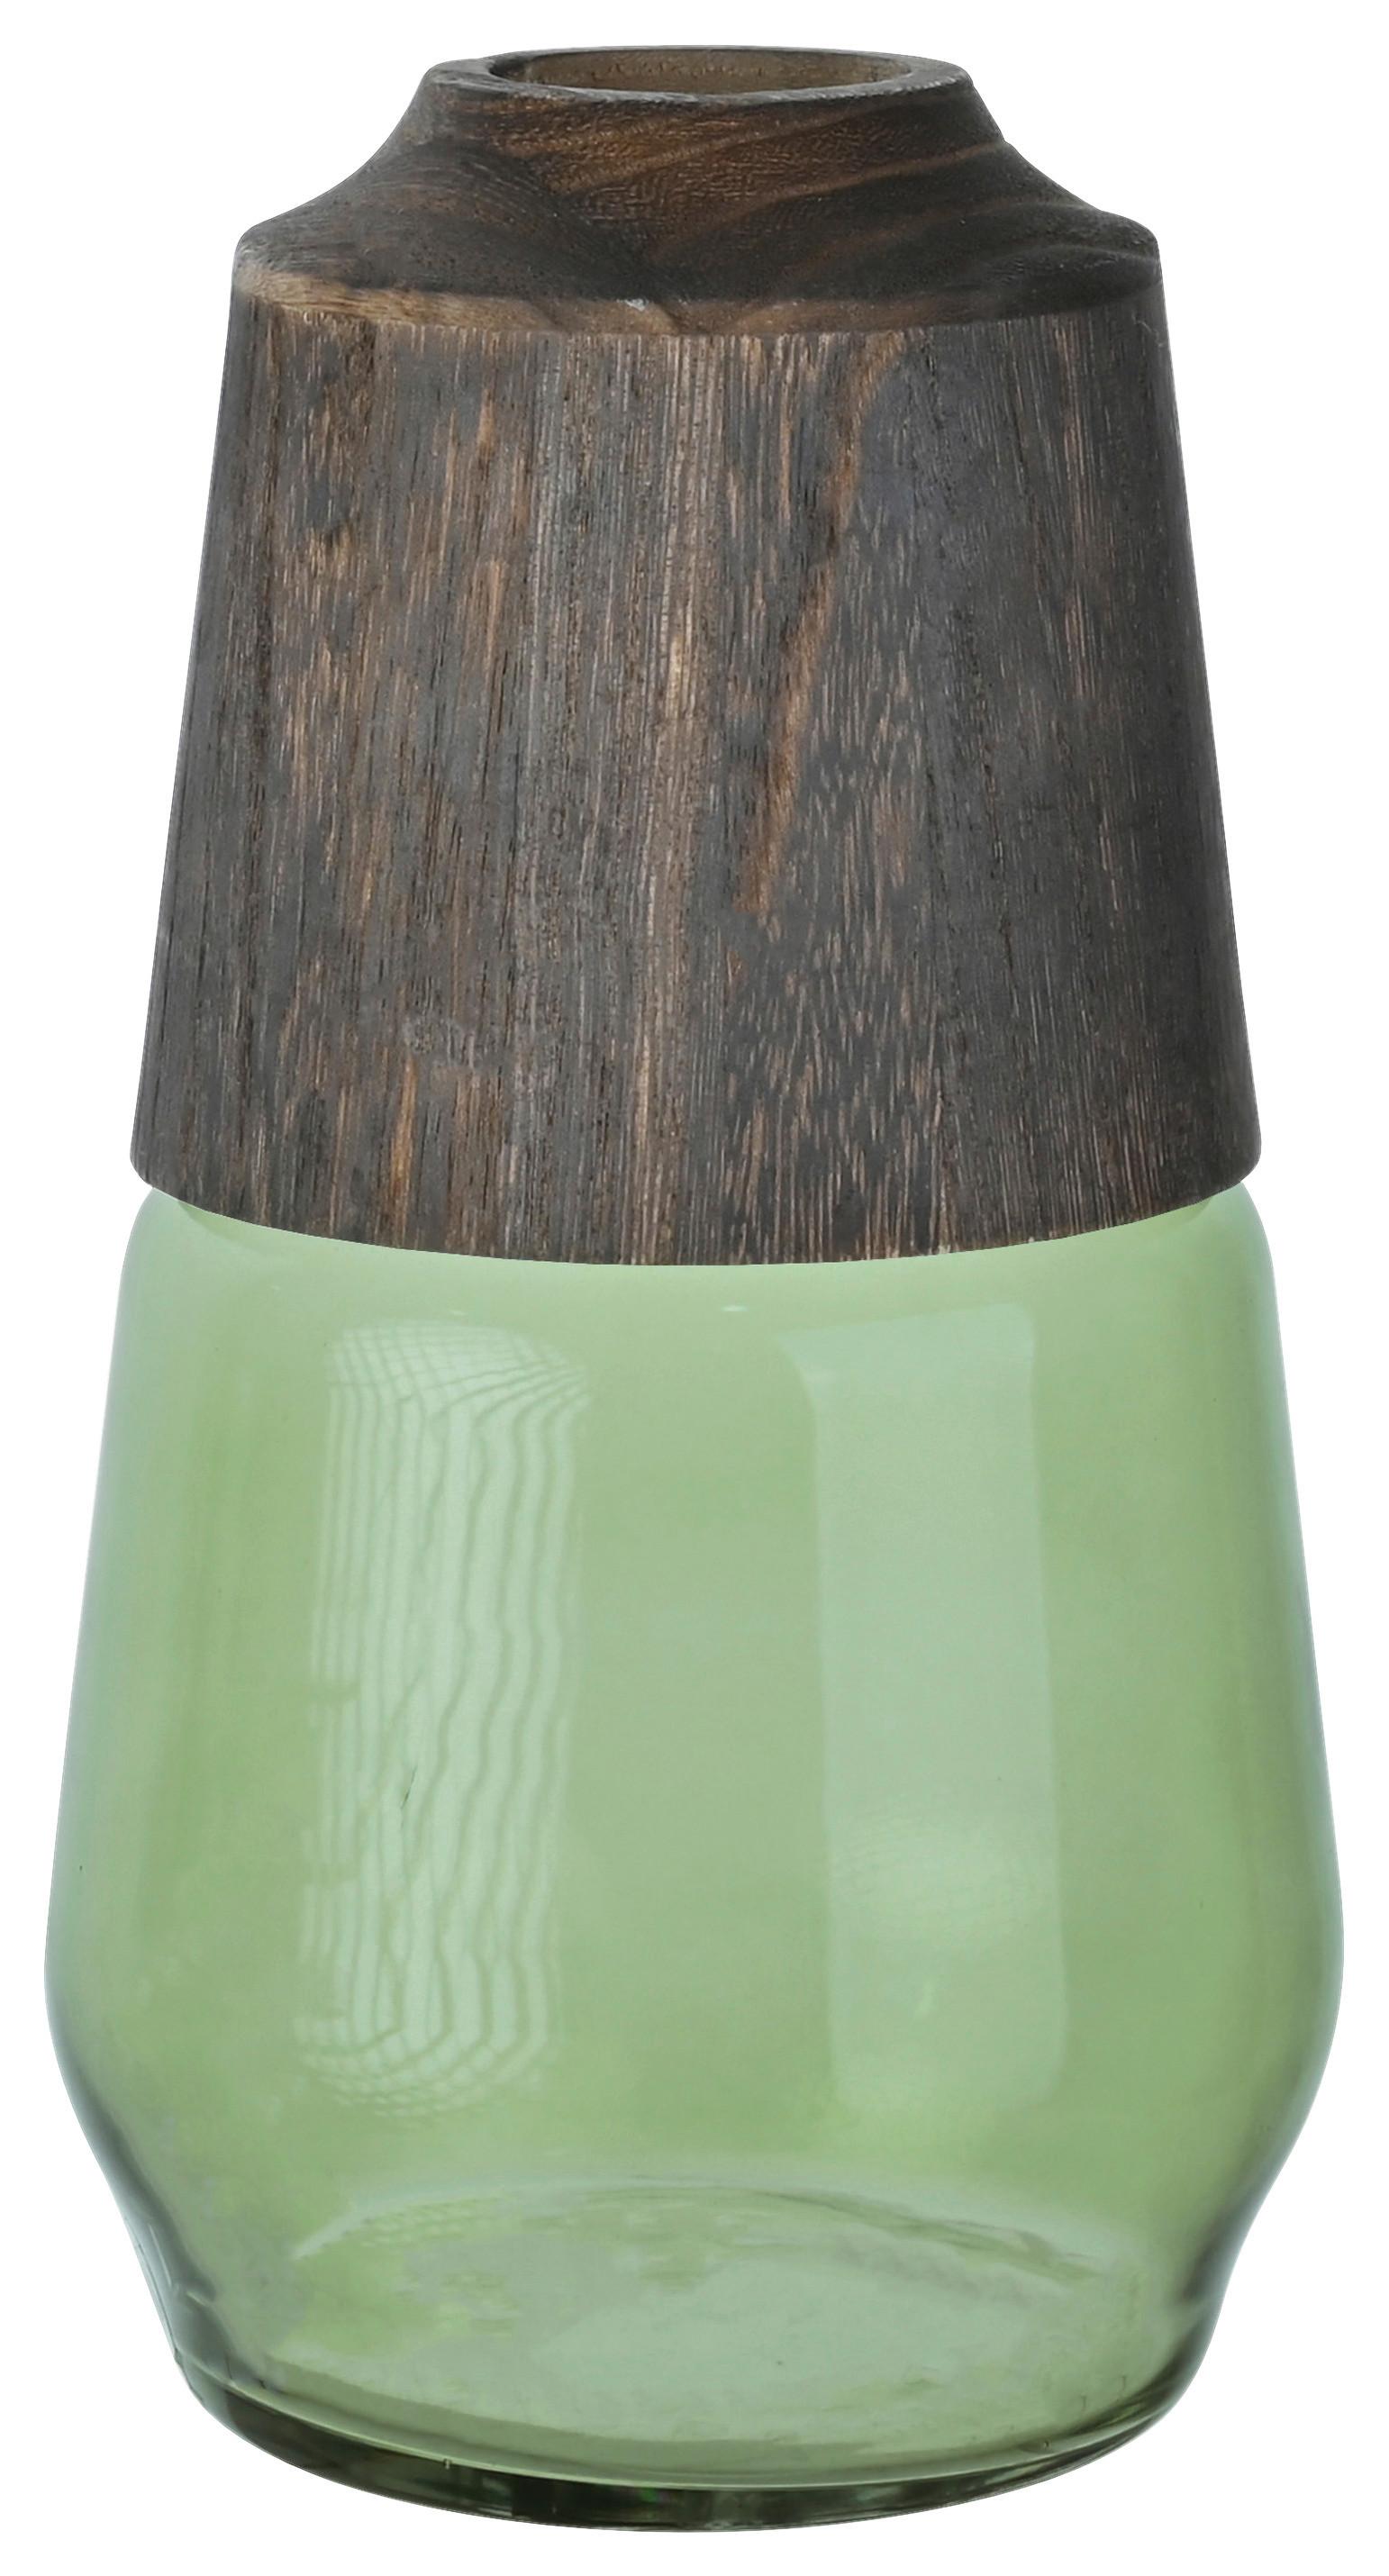 Váza Wood, Výška: 29cm - zelená/hnědá, dřevo/sklo (16/29cm) - Premium Living